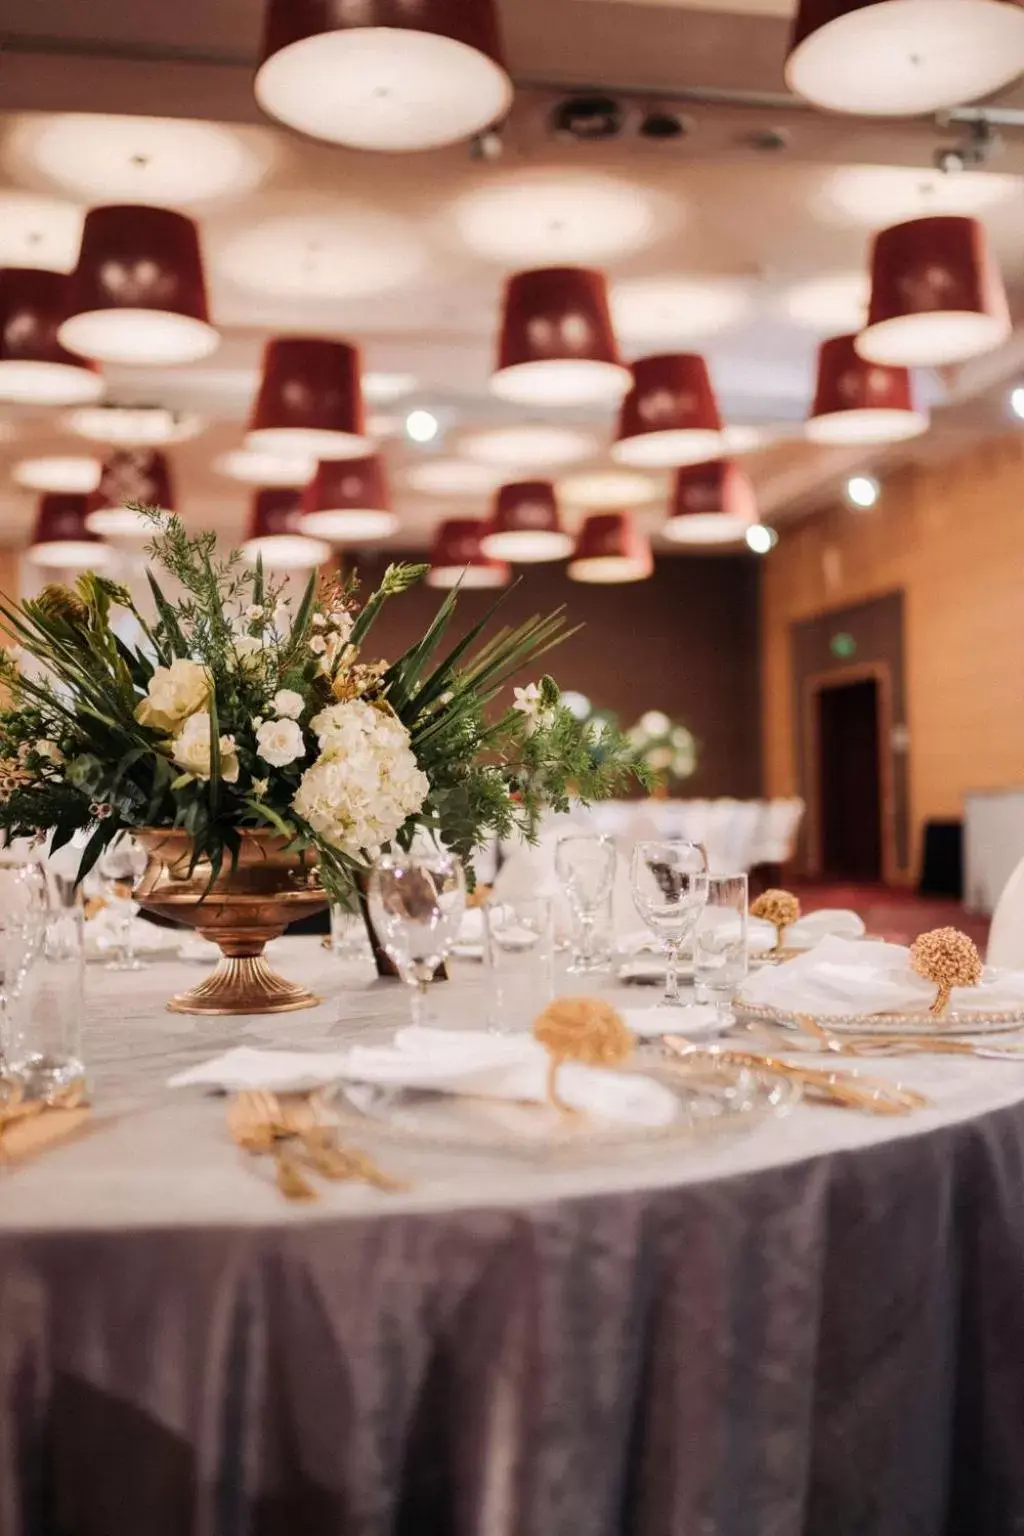 Banquet/Function facilities, Banquet Facilities in Ramada Sibiu Hotel